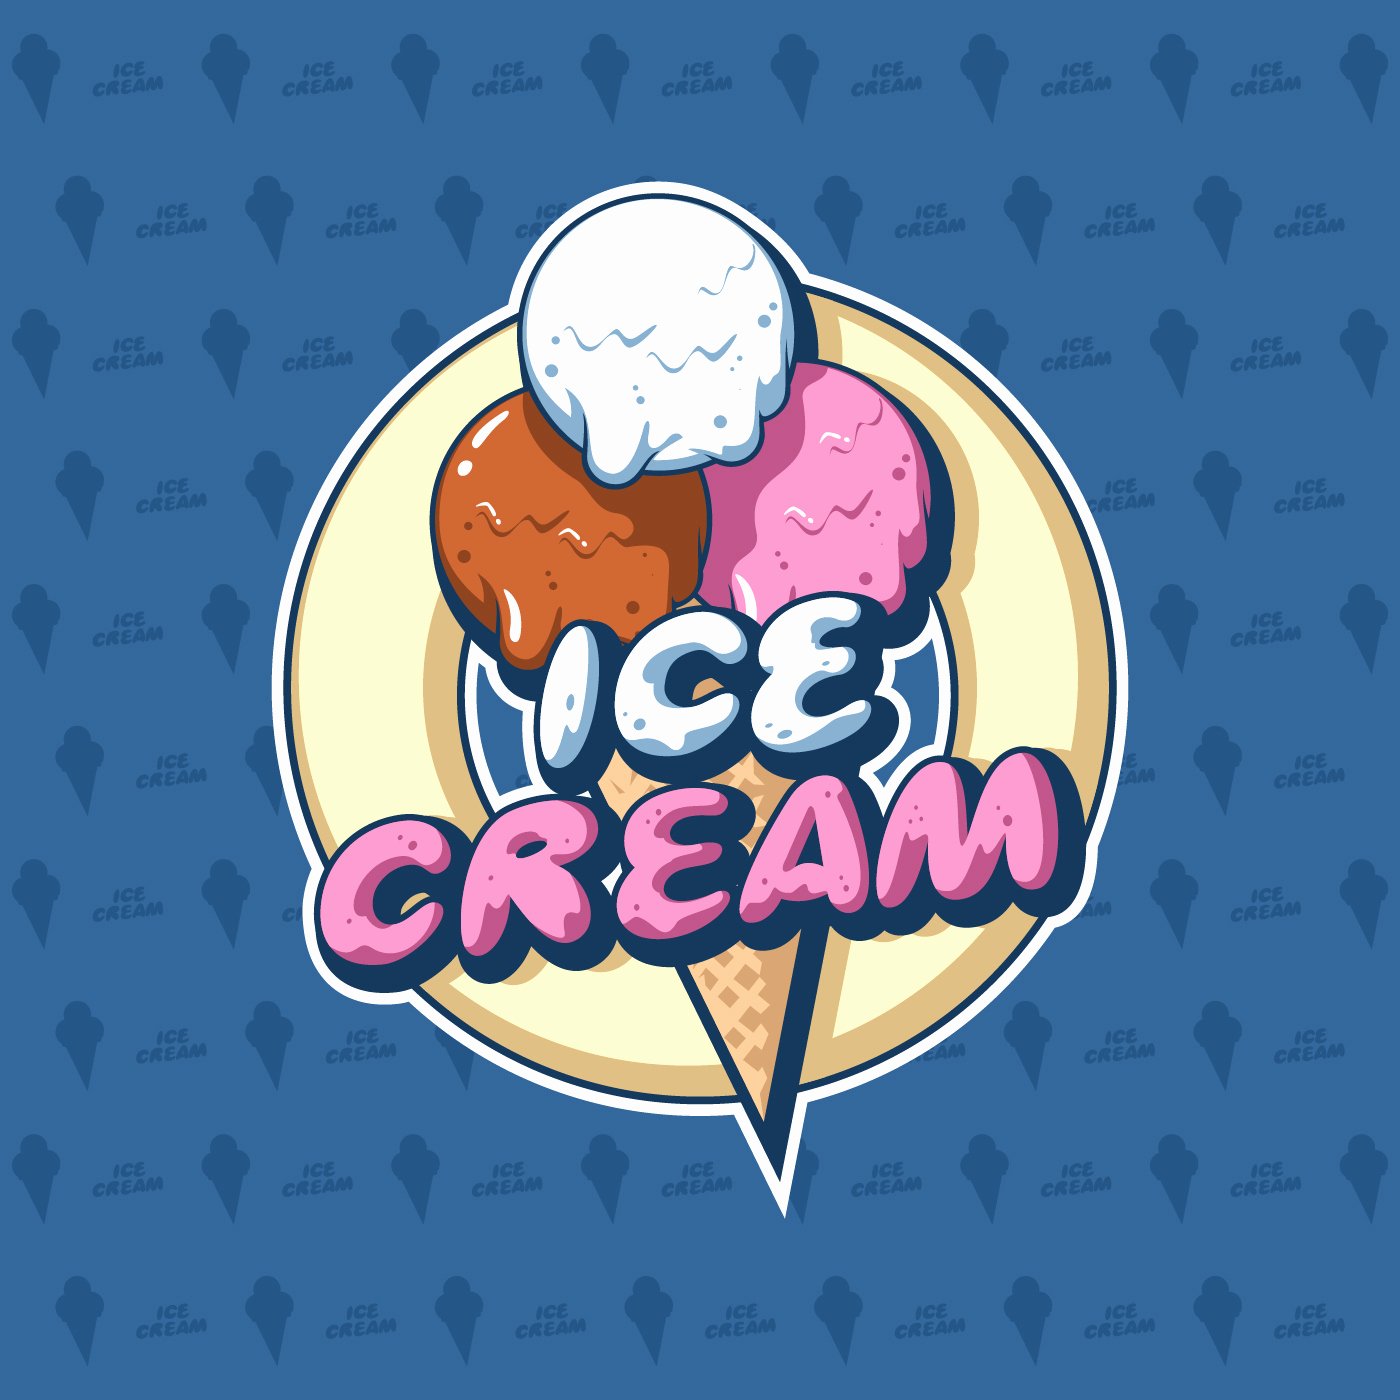 Ice Cream Shop Logo Best Of Ice Cream Cone Shop Logo Vector Download Free Vector Art